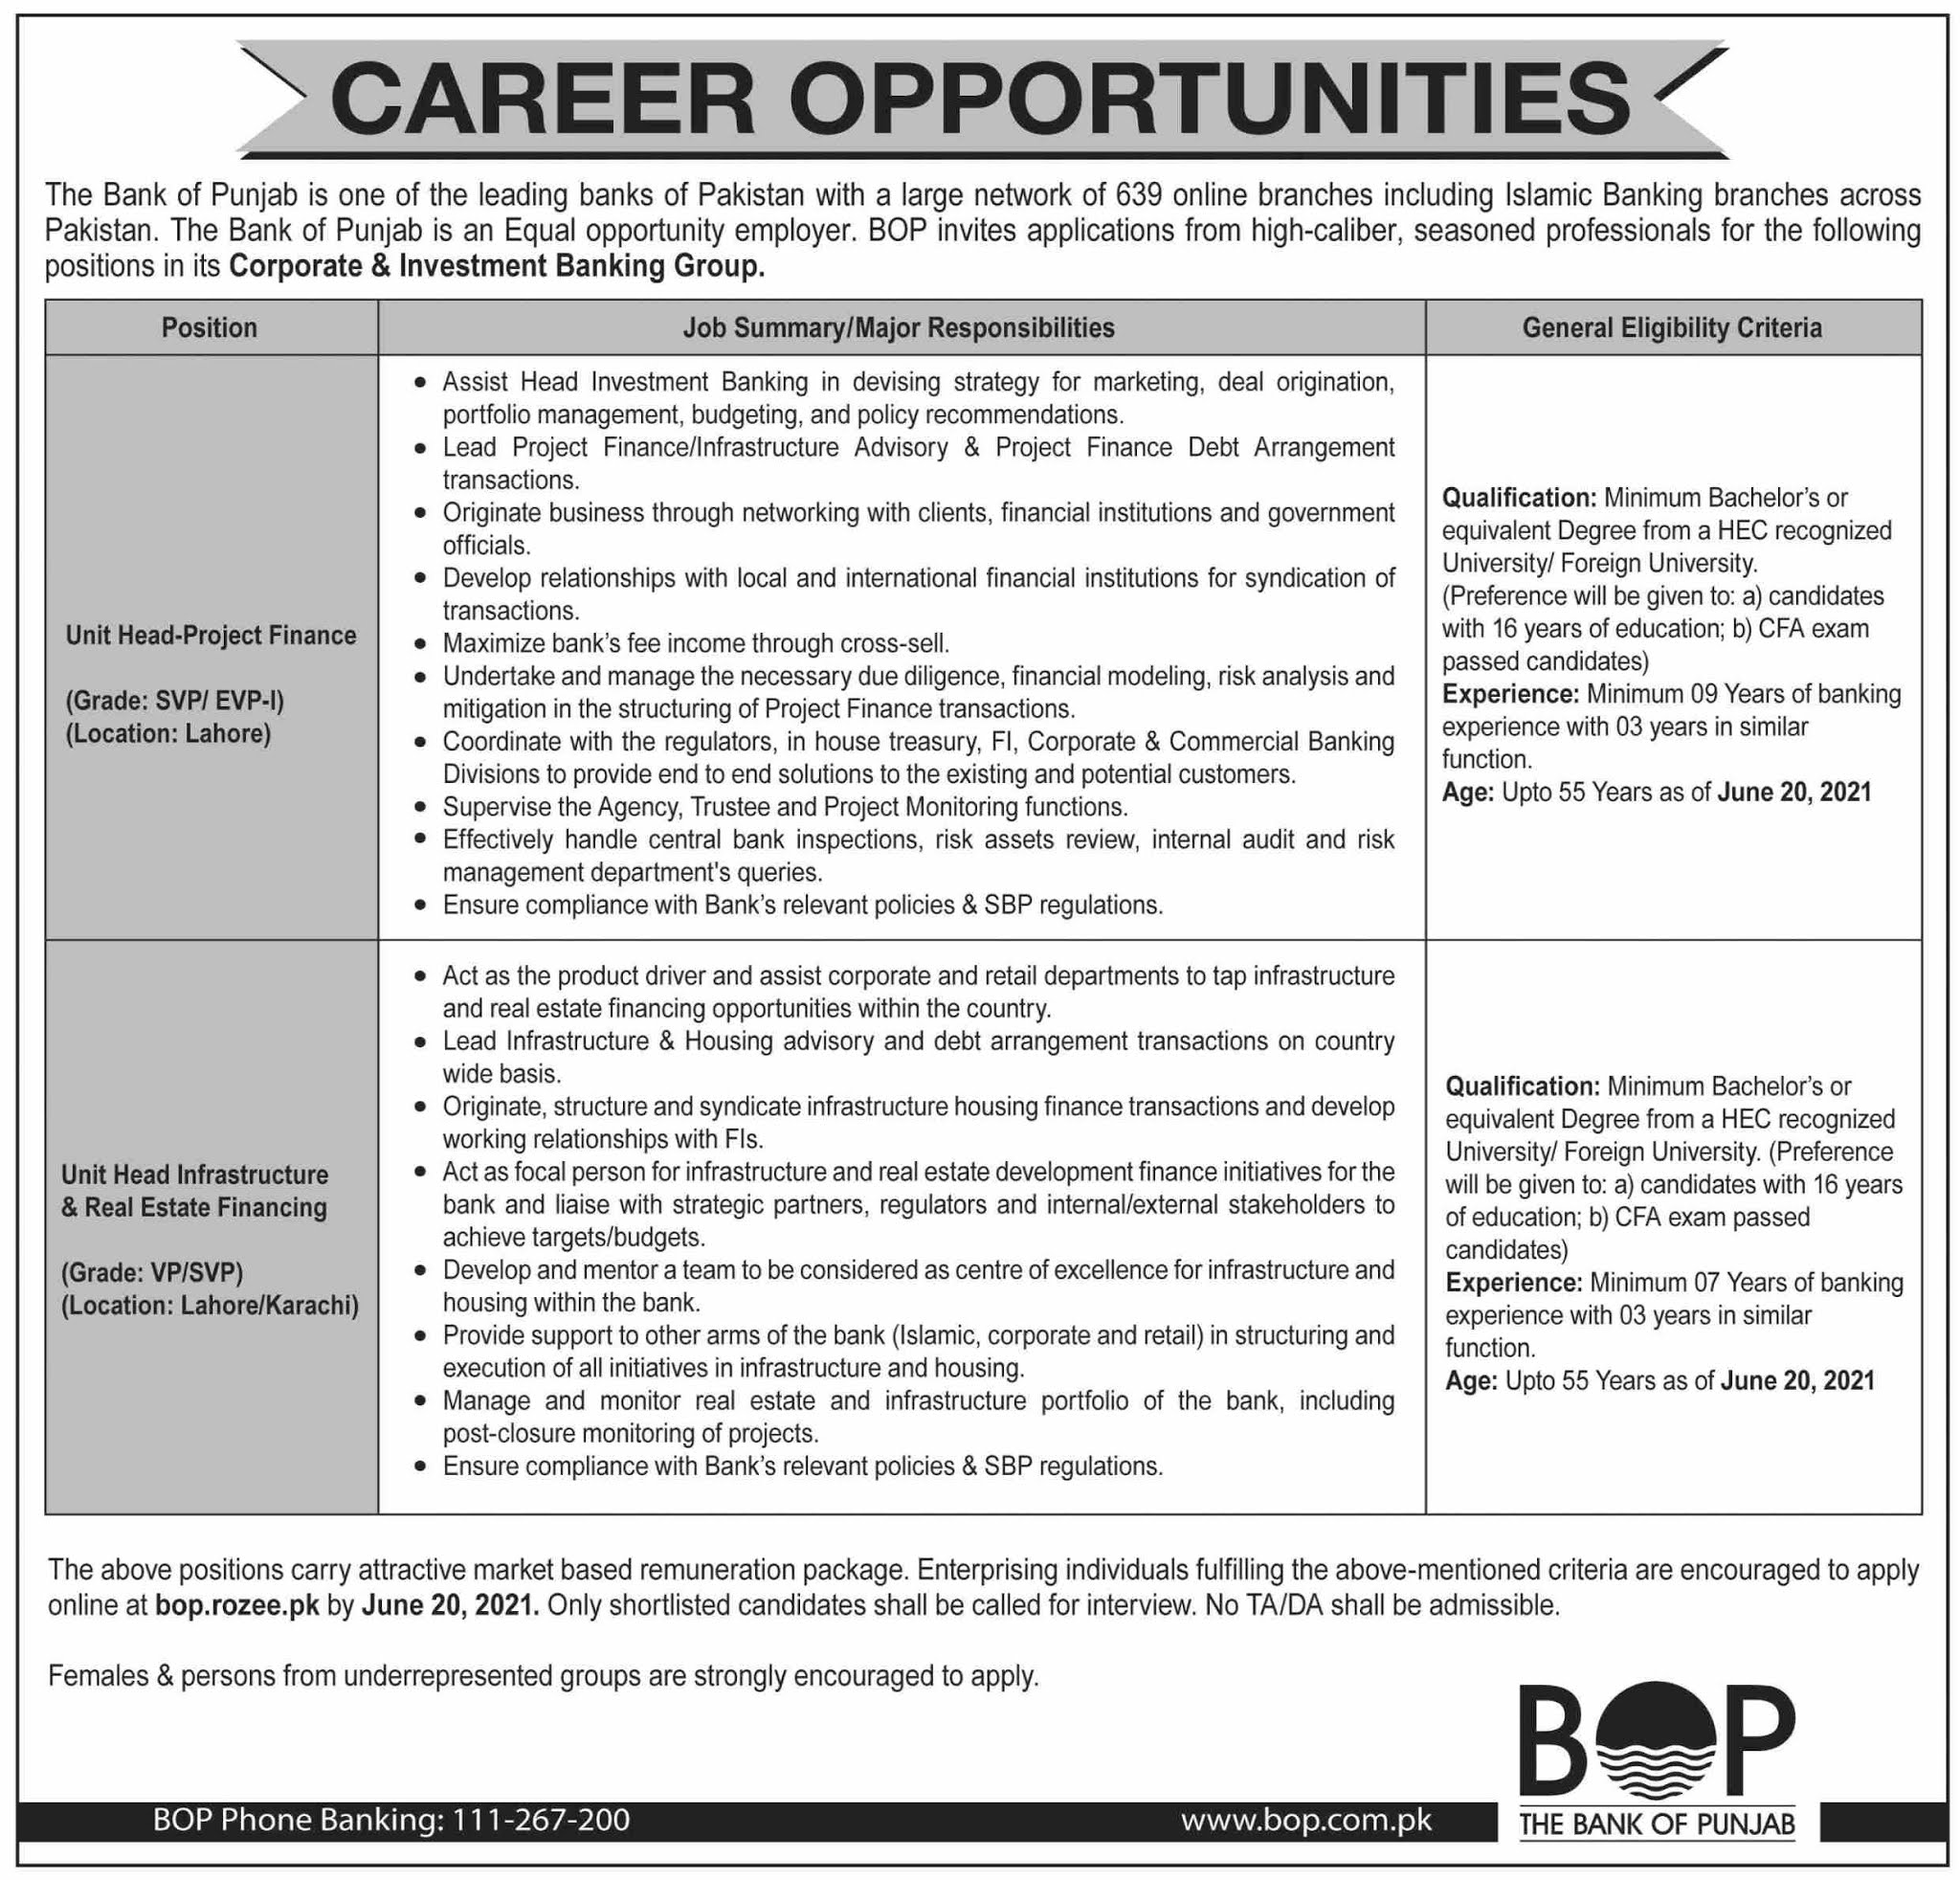 bop.rozee.pk Jobs 2021 - Bank of Punjab (BOP) Jobs 2021 in Pakistan